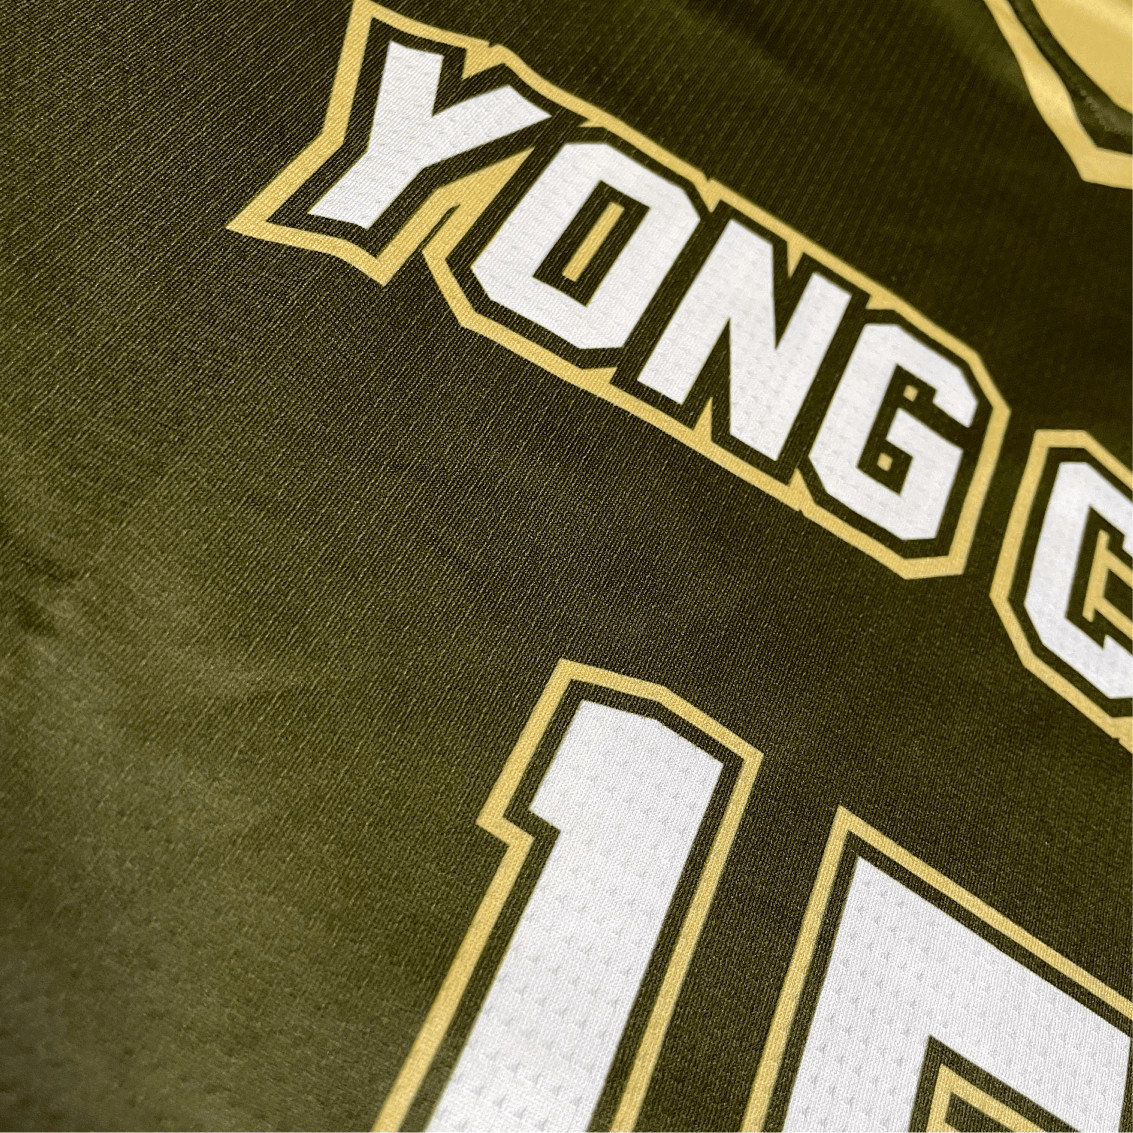 YONG CHUN 籃球隊